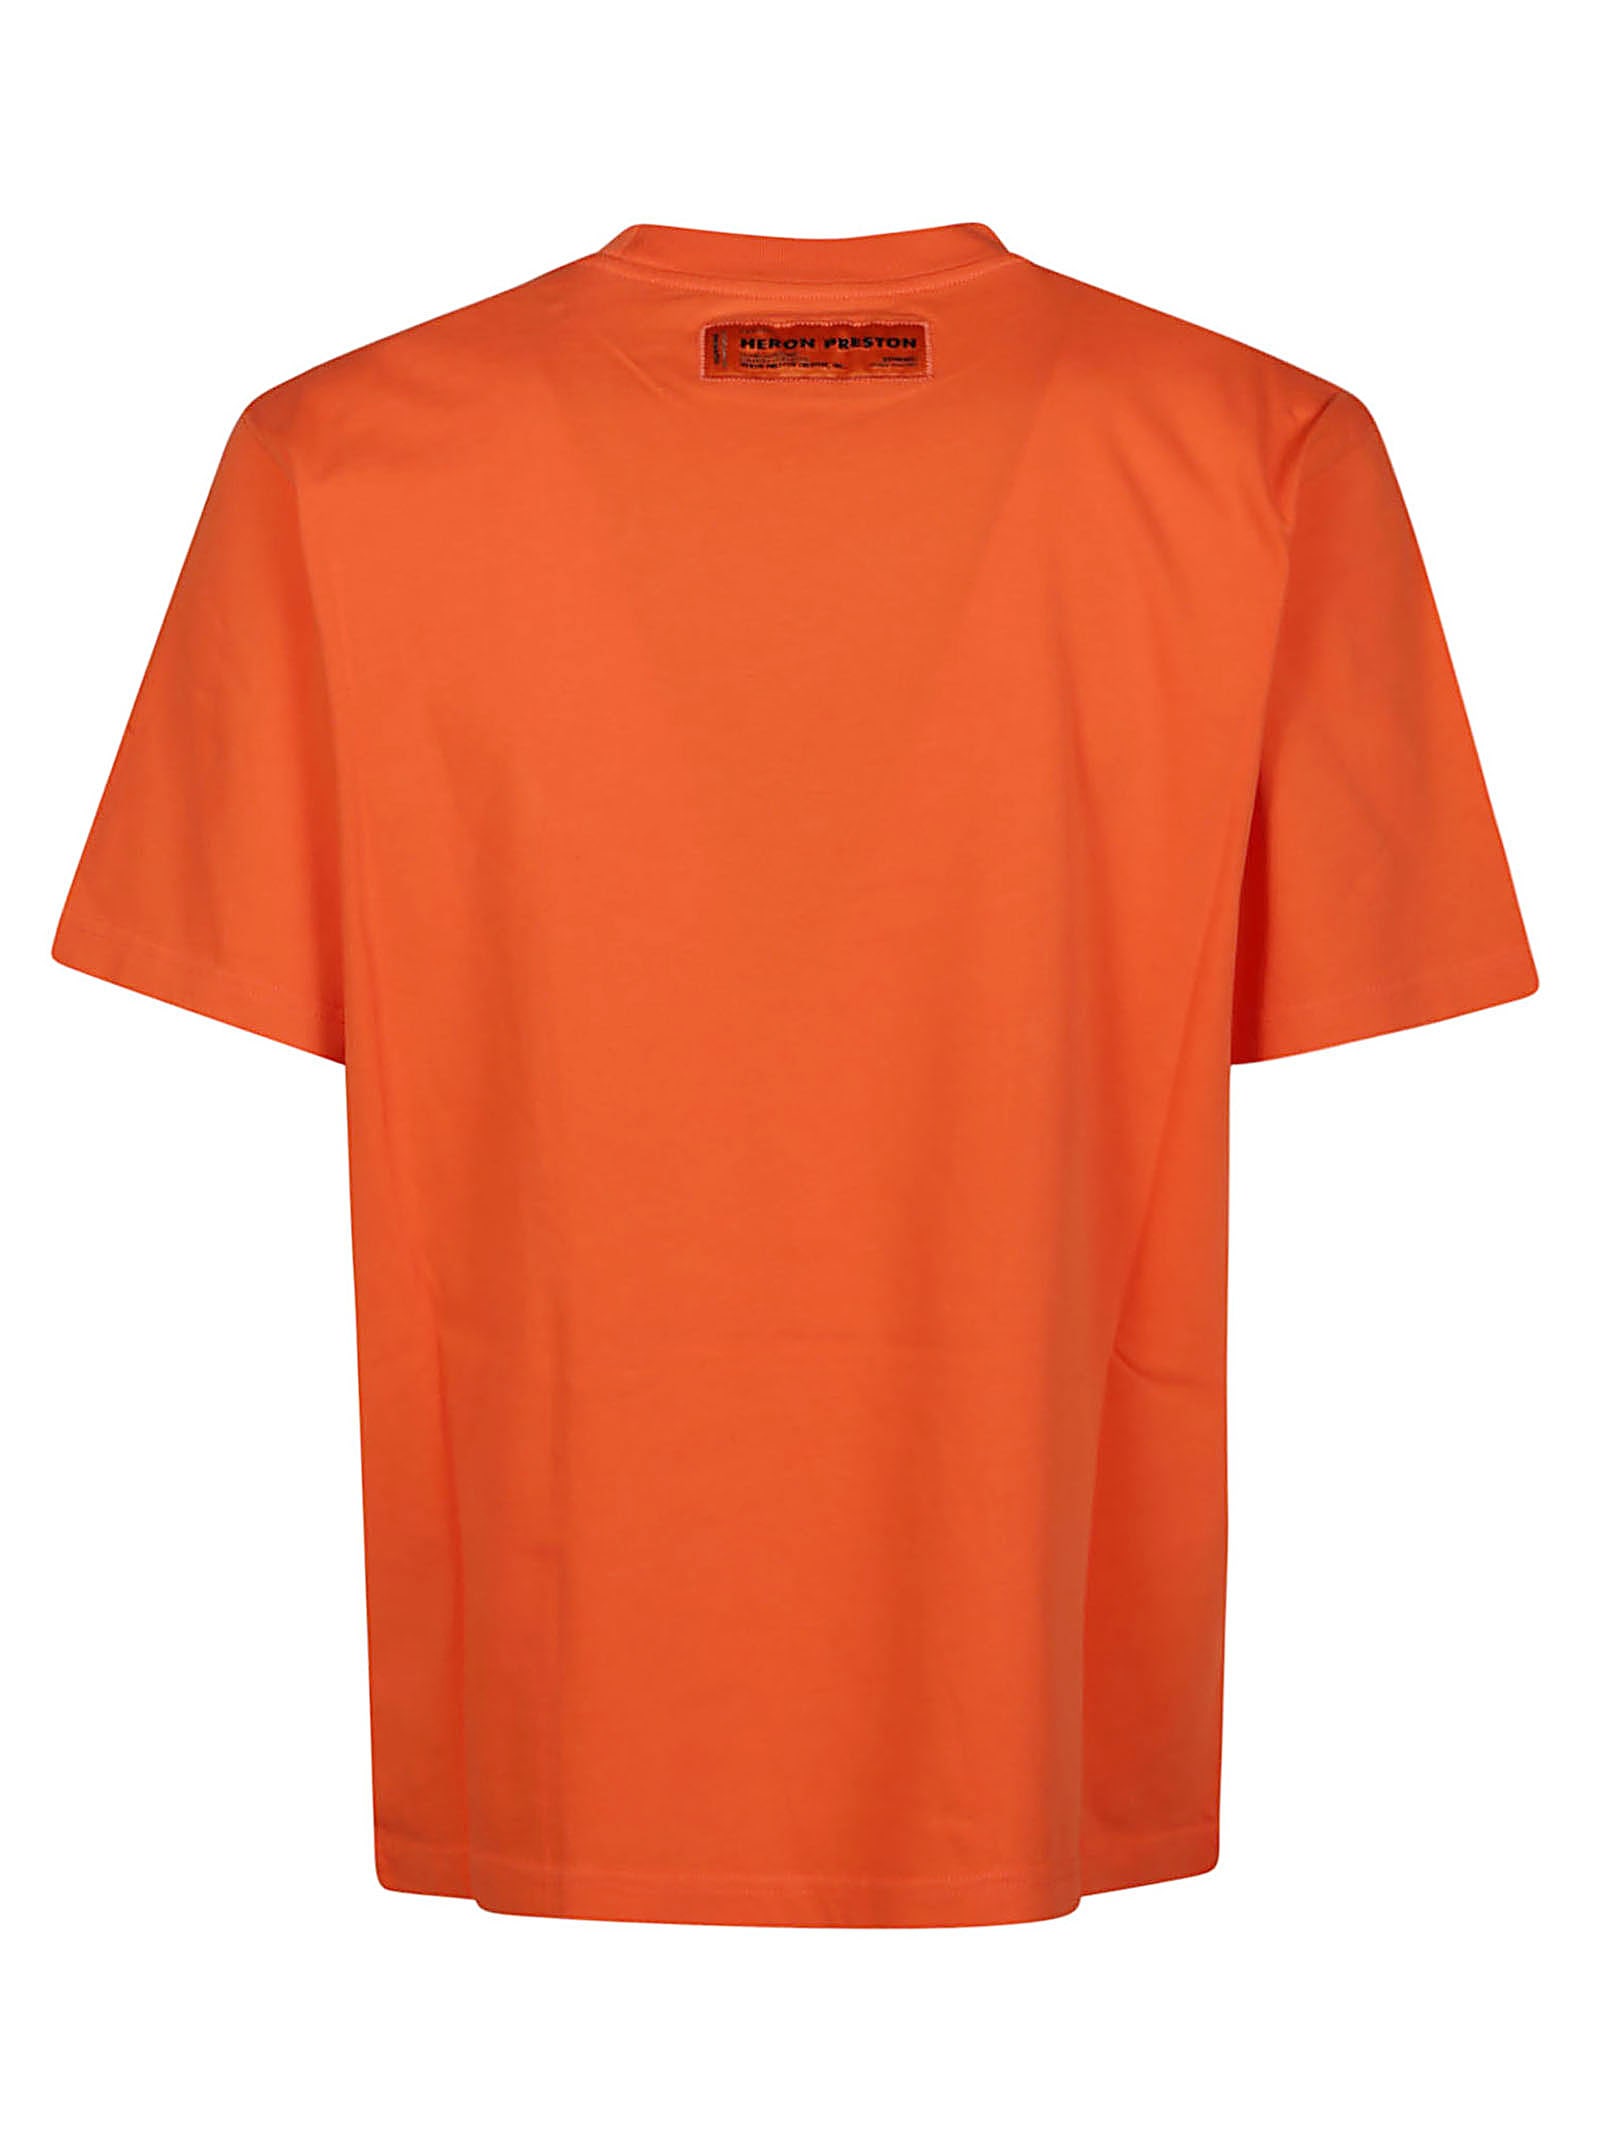 Shop Heron Preston Hpny Embroidery T-shirt In Orange White